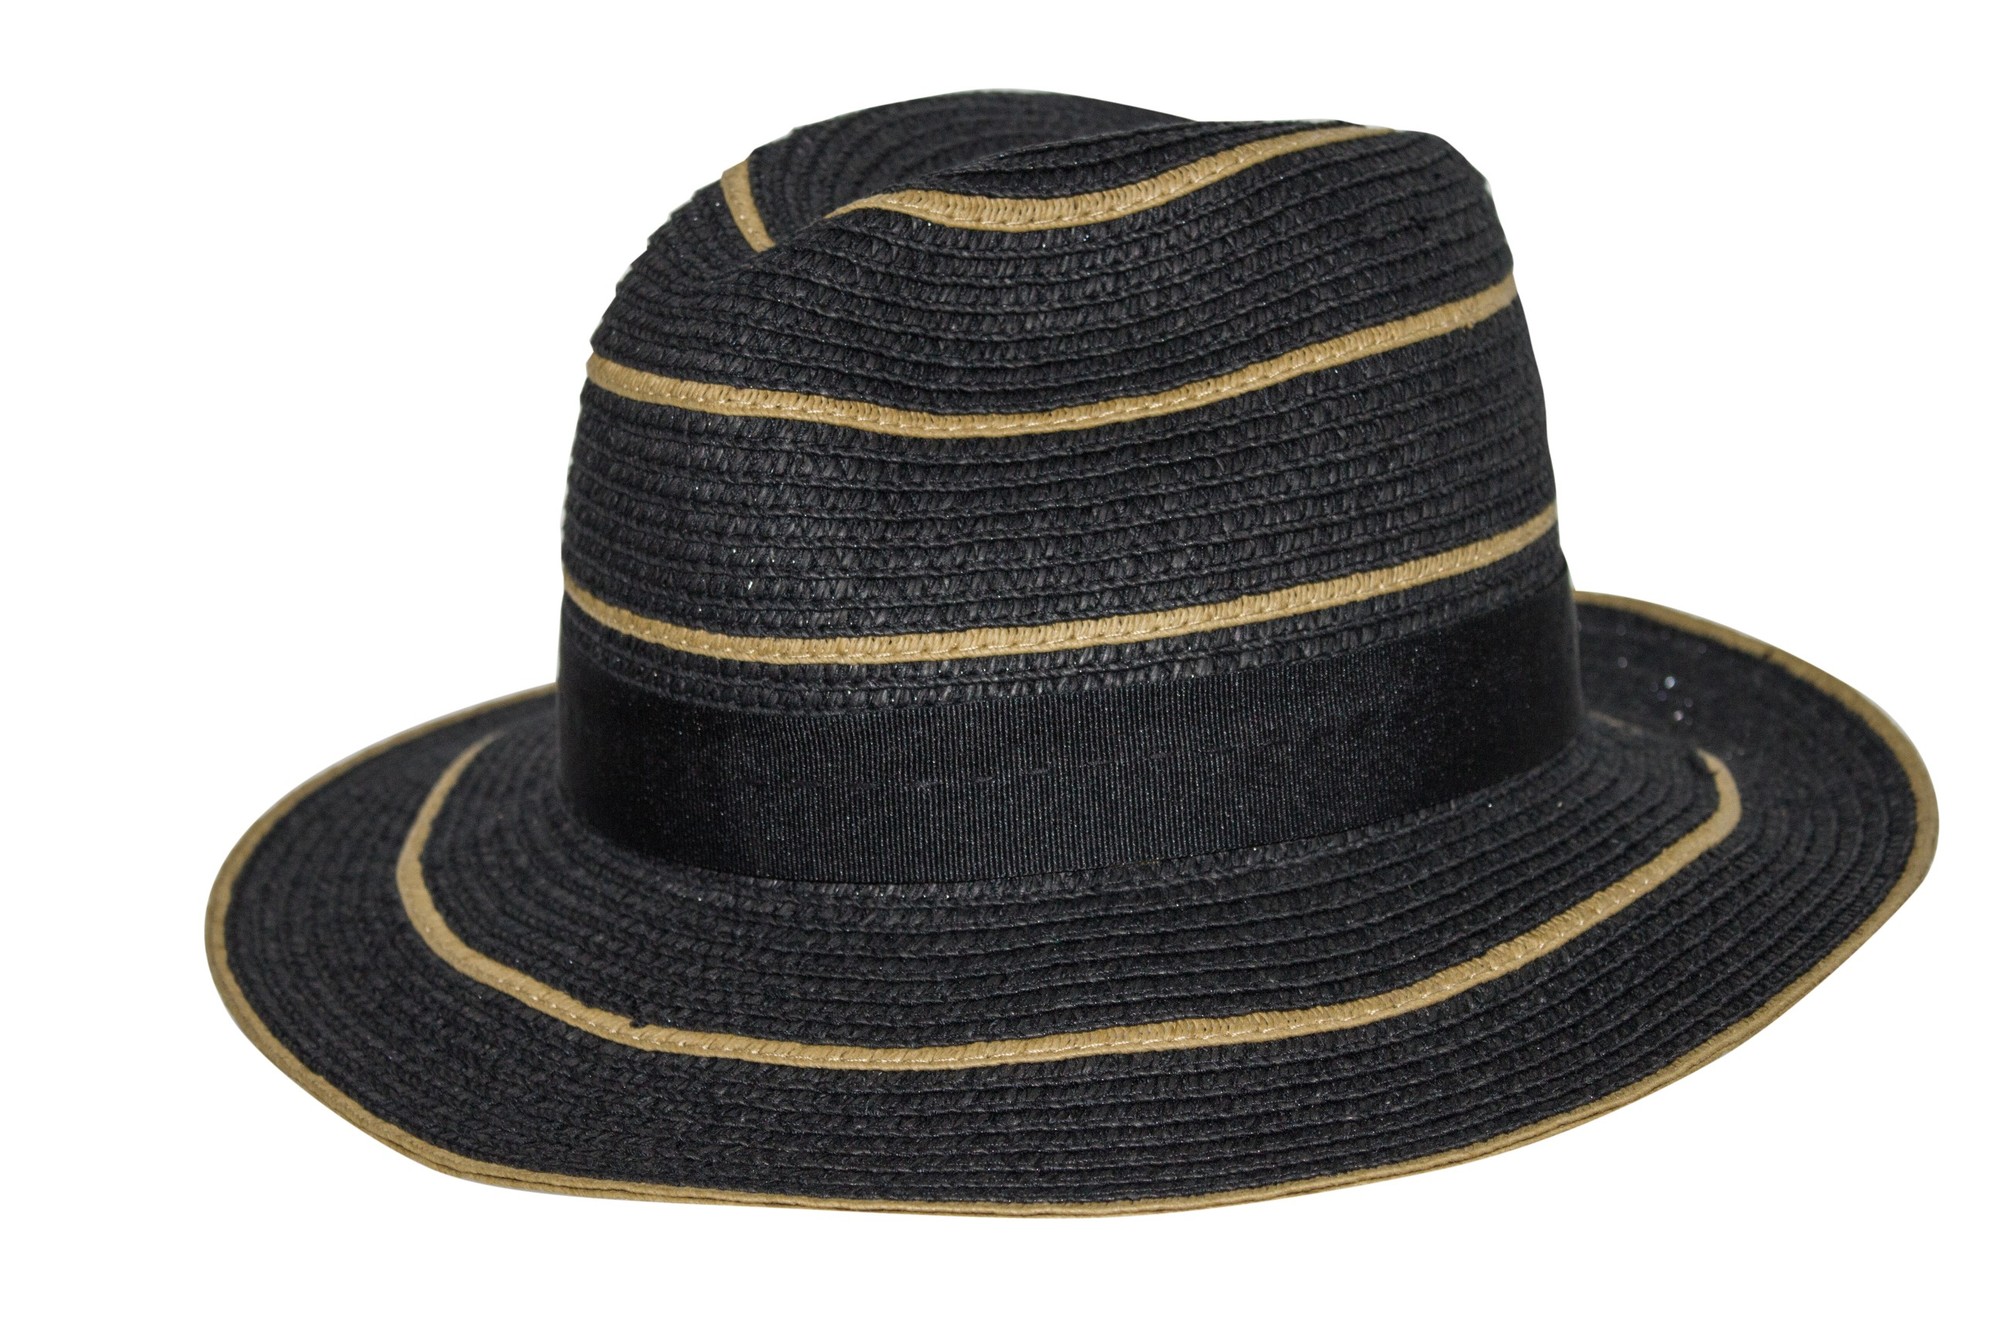 Rigon - UV straw hat for women - Maria - Black / naturel